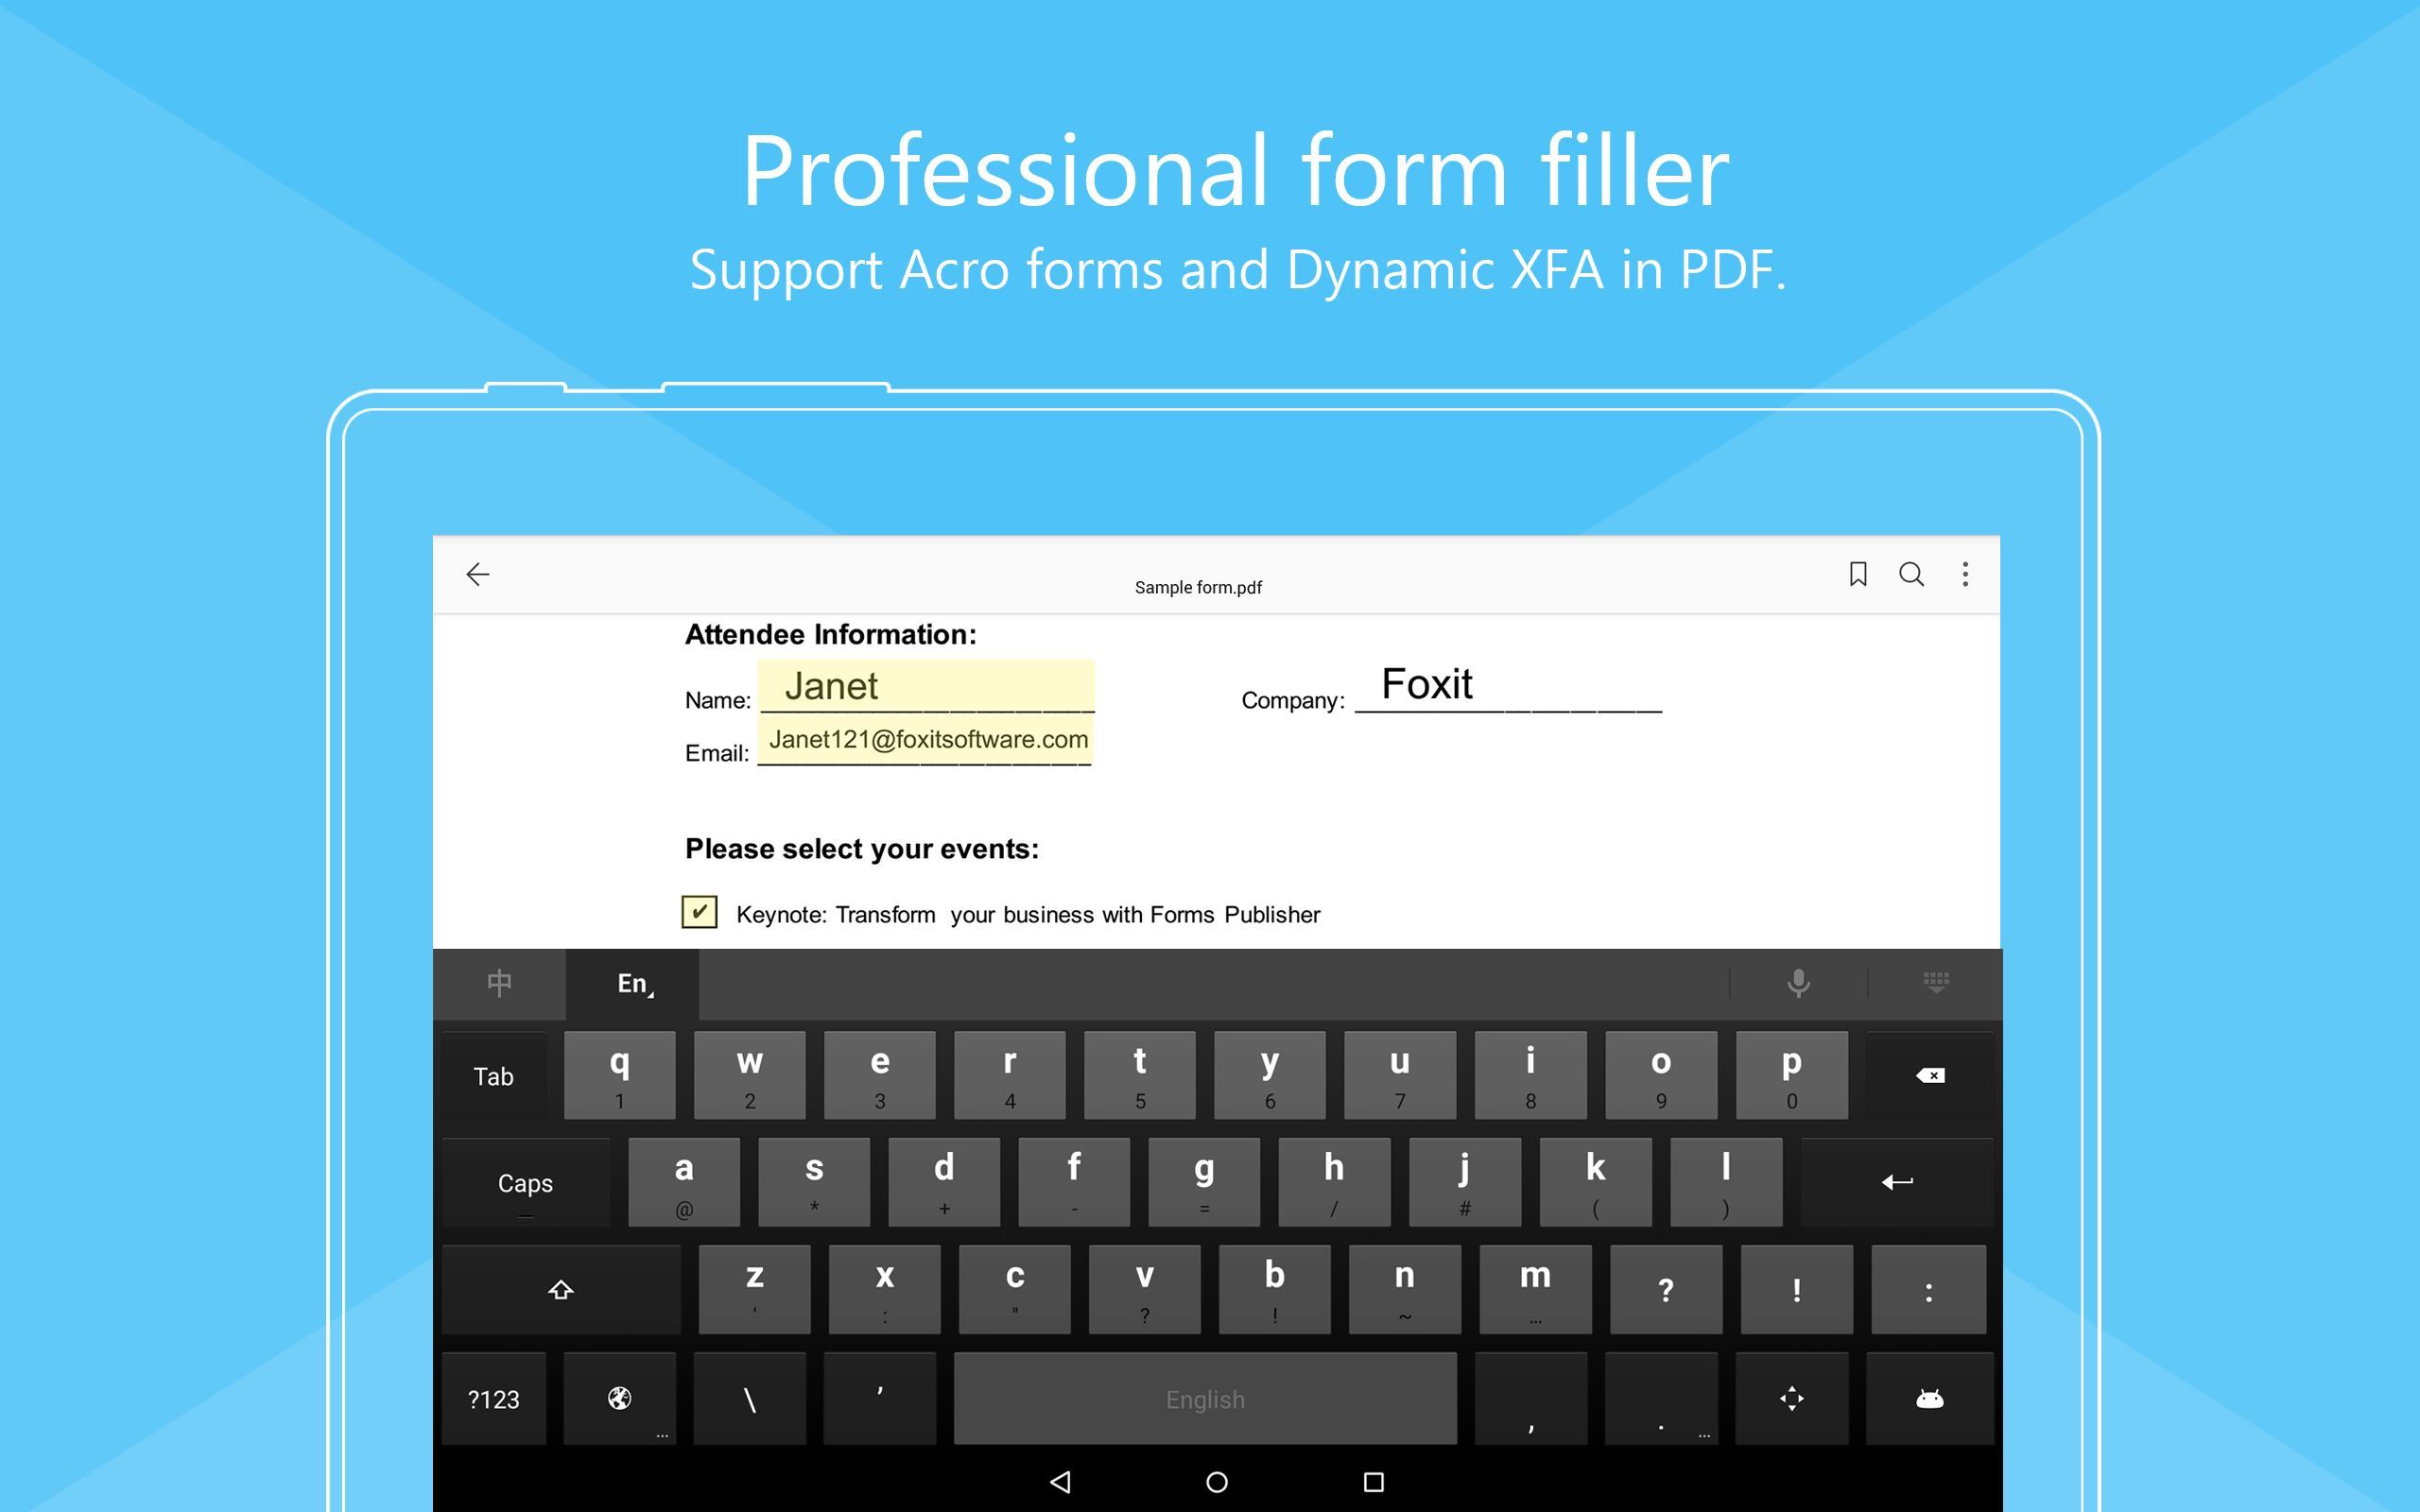 Foxit PDF - PDF reader, editor, form, signature & converter